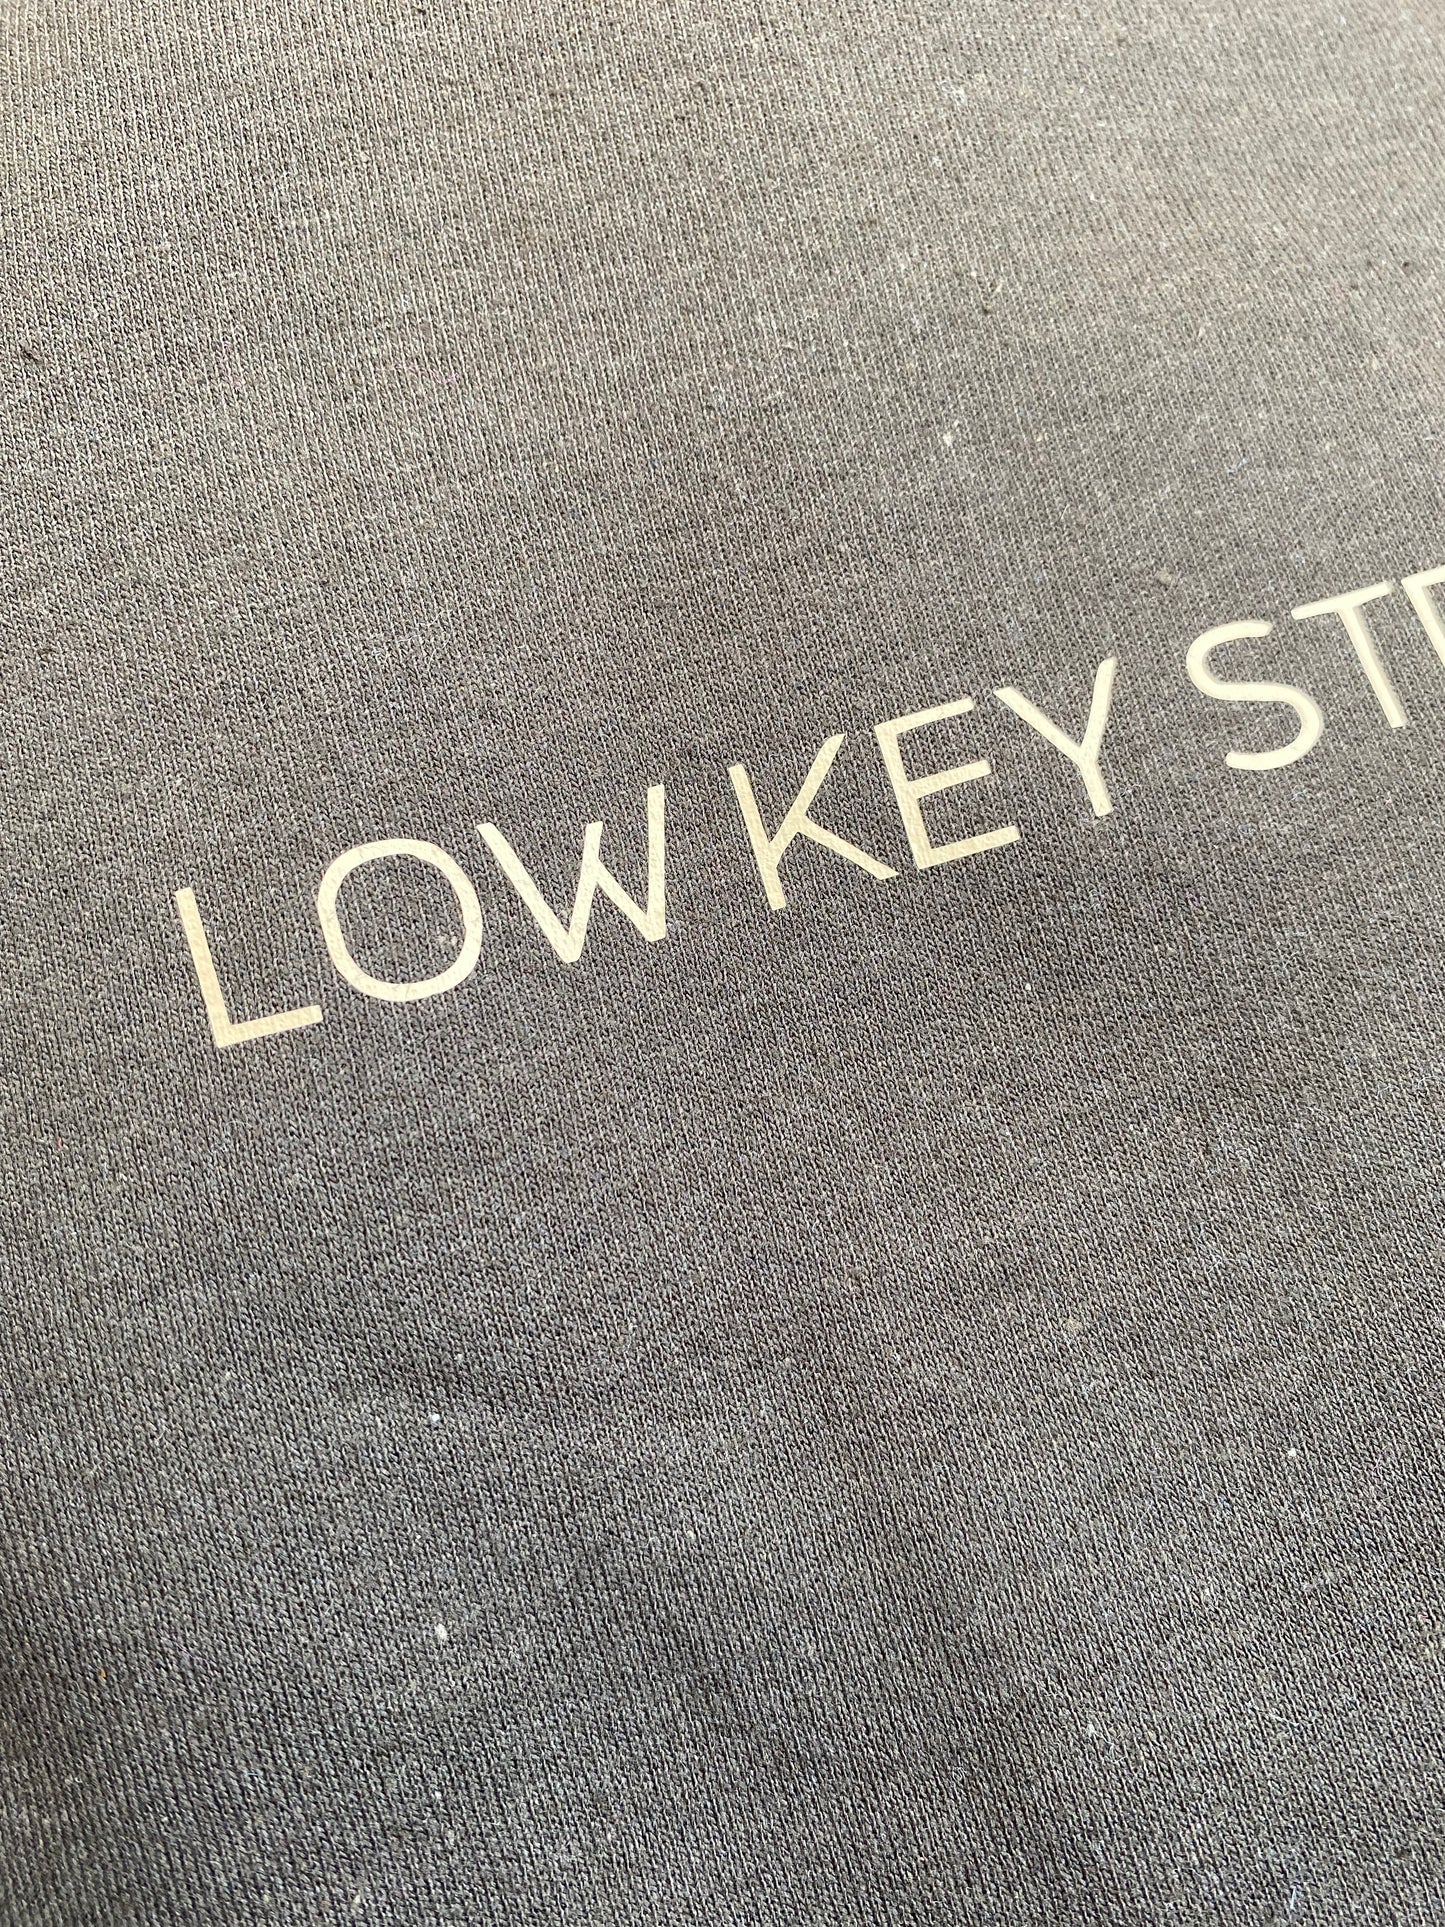 Low Key Stressed Sweatshirt